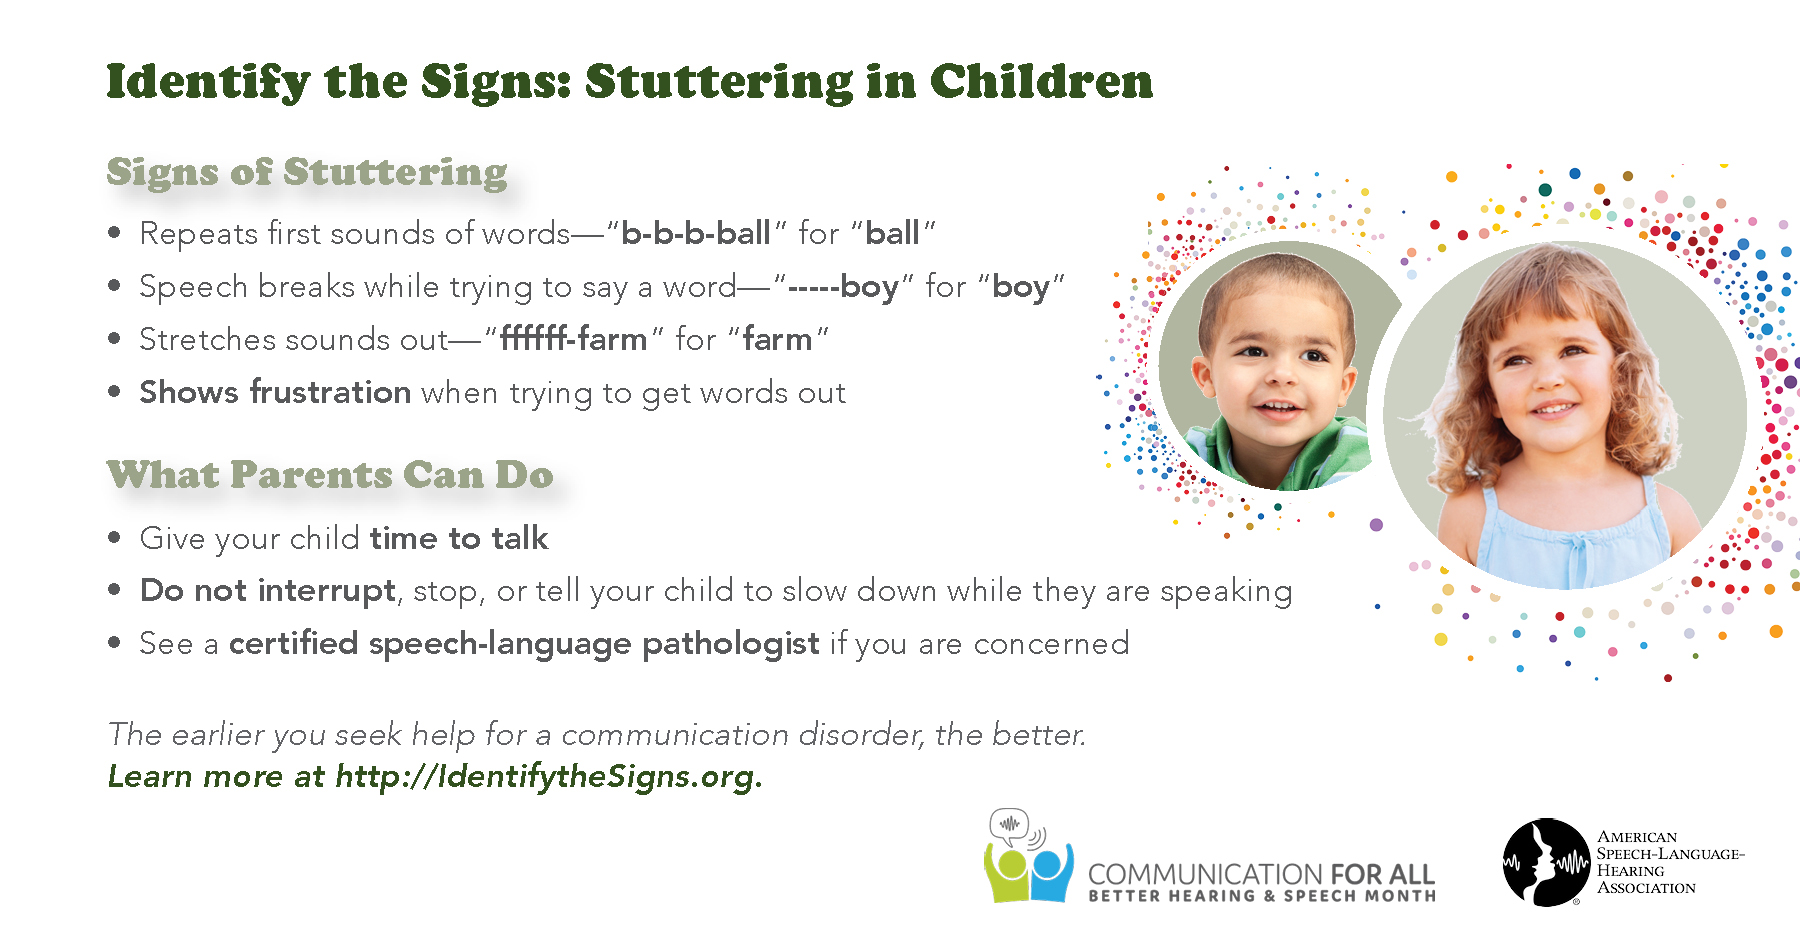 Signs of Stuttering in Children